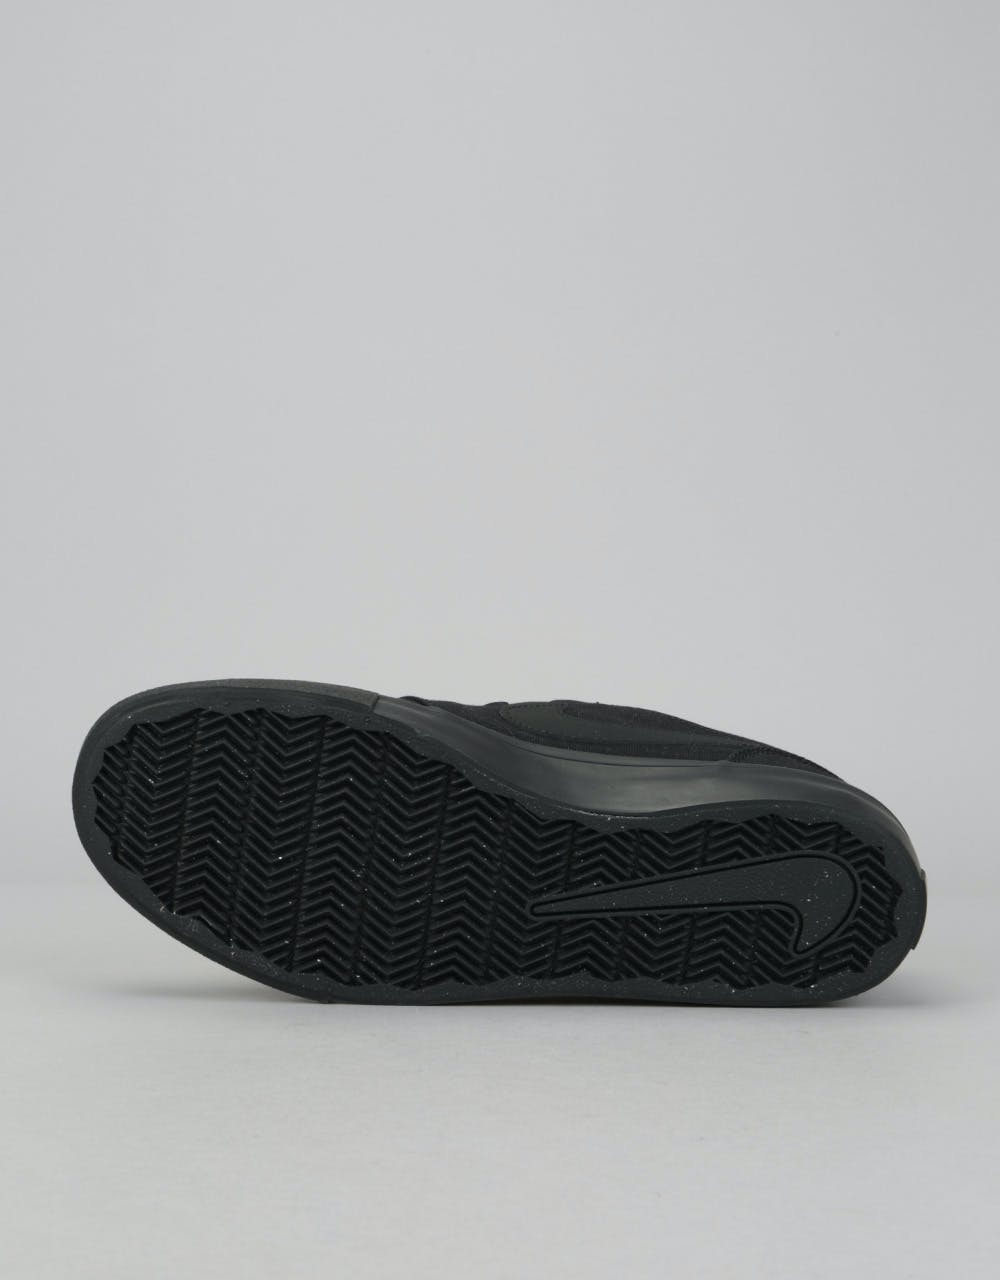 Nike SB Solarsoft Portmore II Skate Shoes - Black/Black